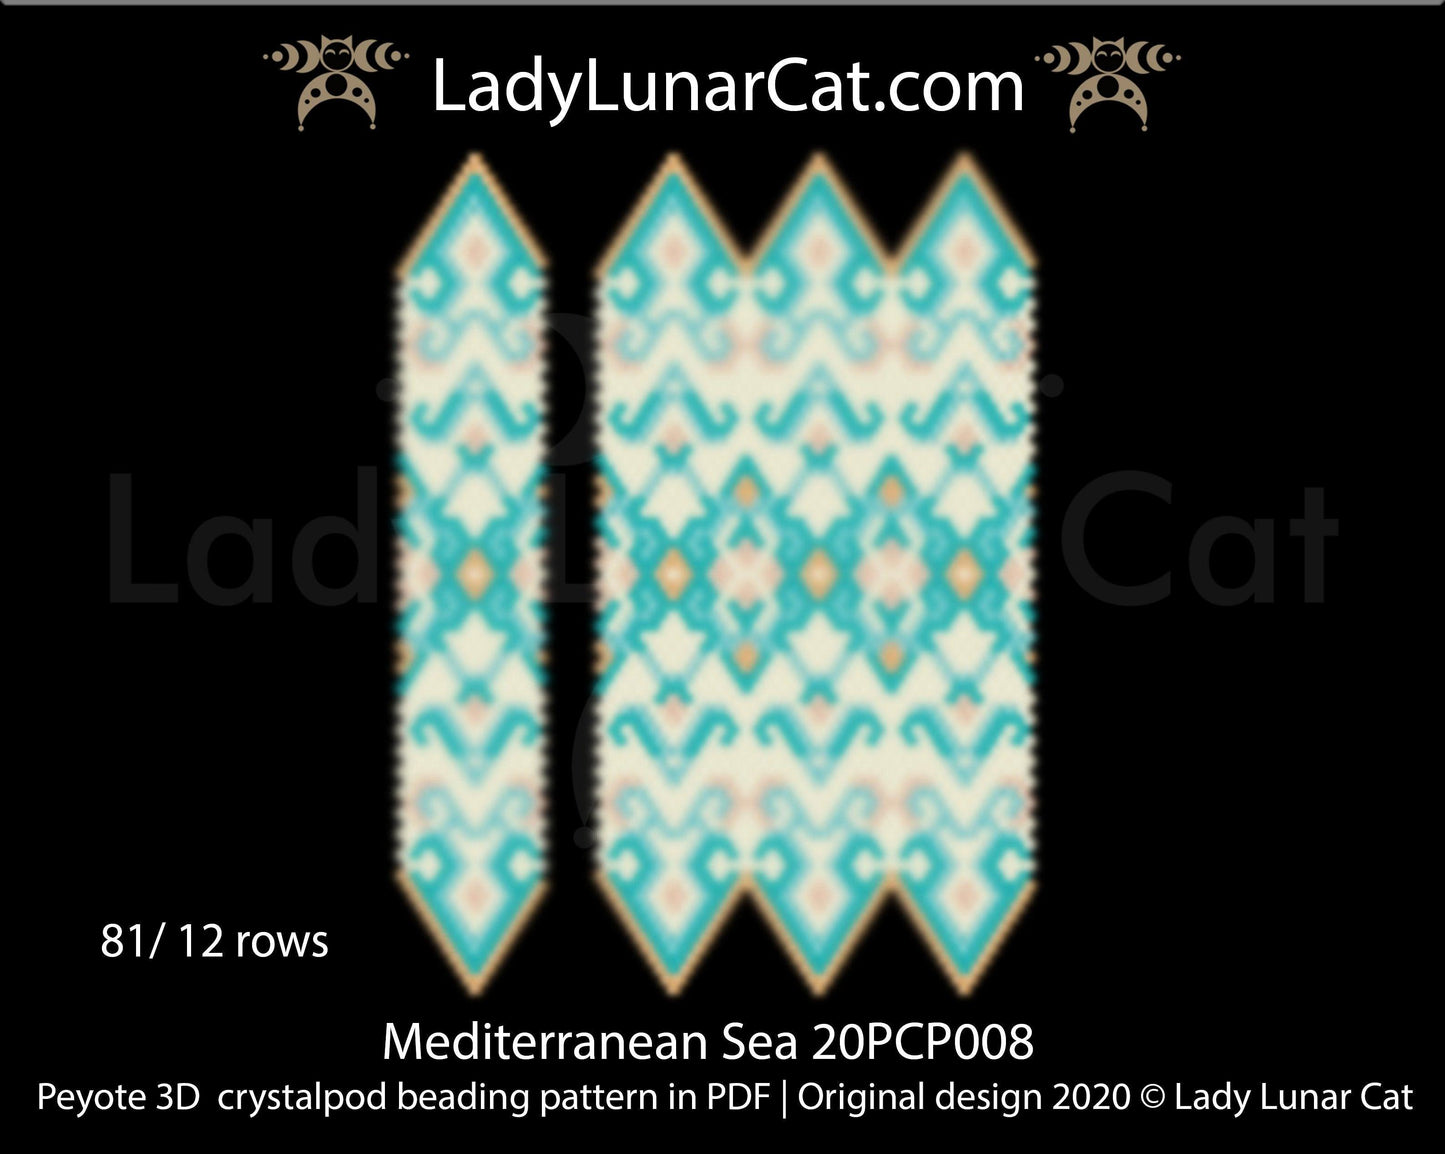 Peyote 3D crystalpod pattern for beading Mediterranean Sea 20PCP008 LadyLunarCat